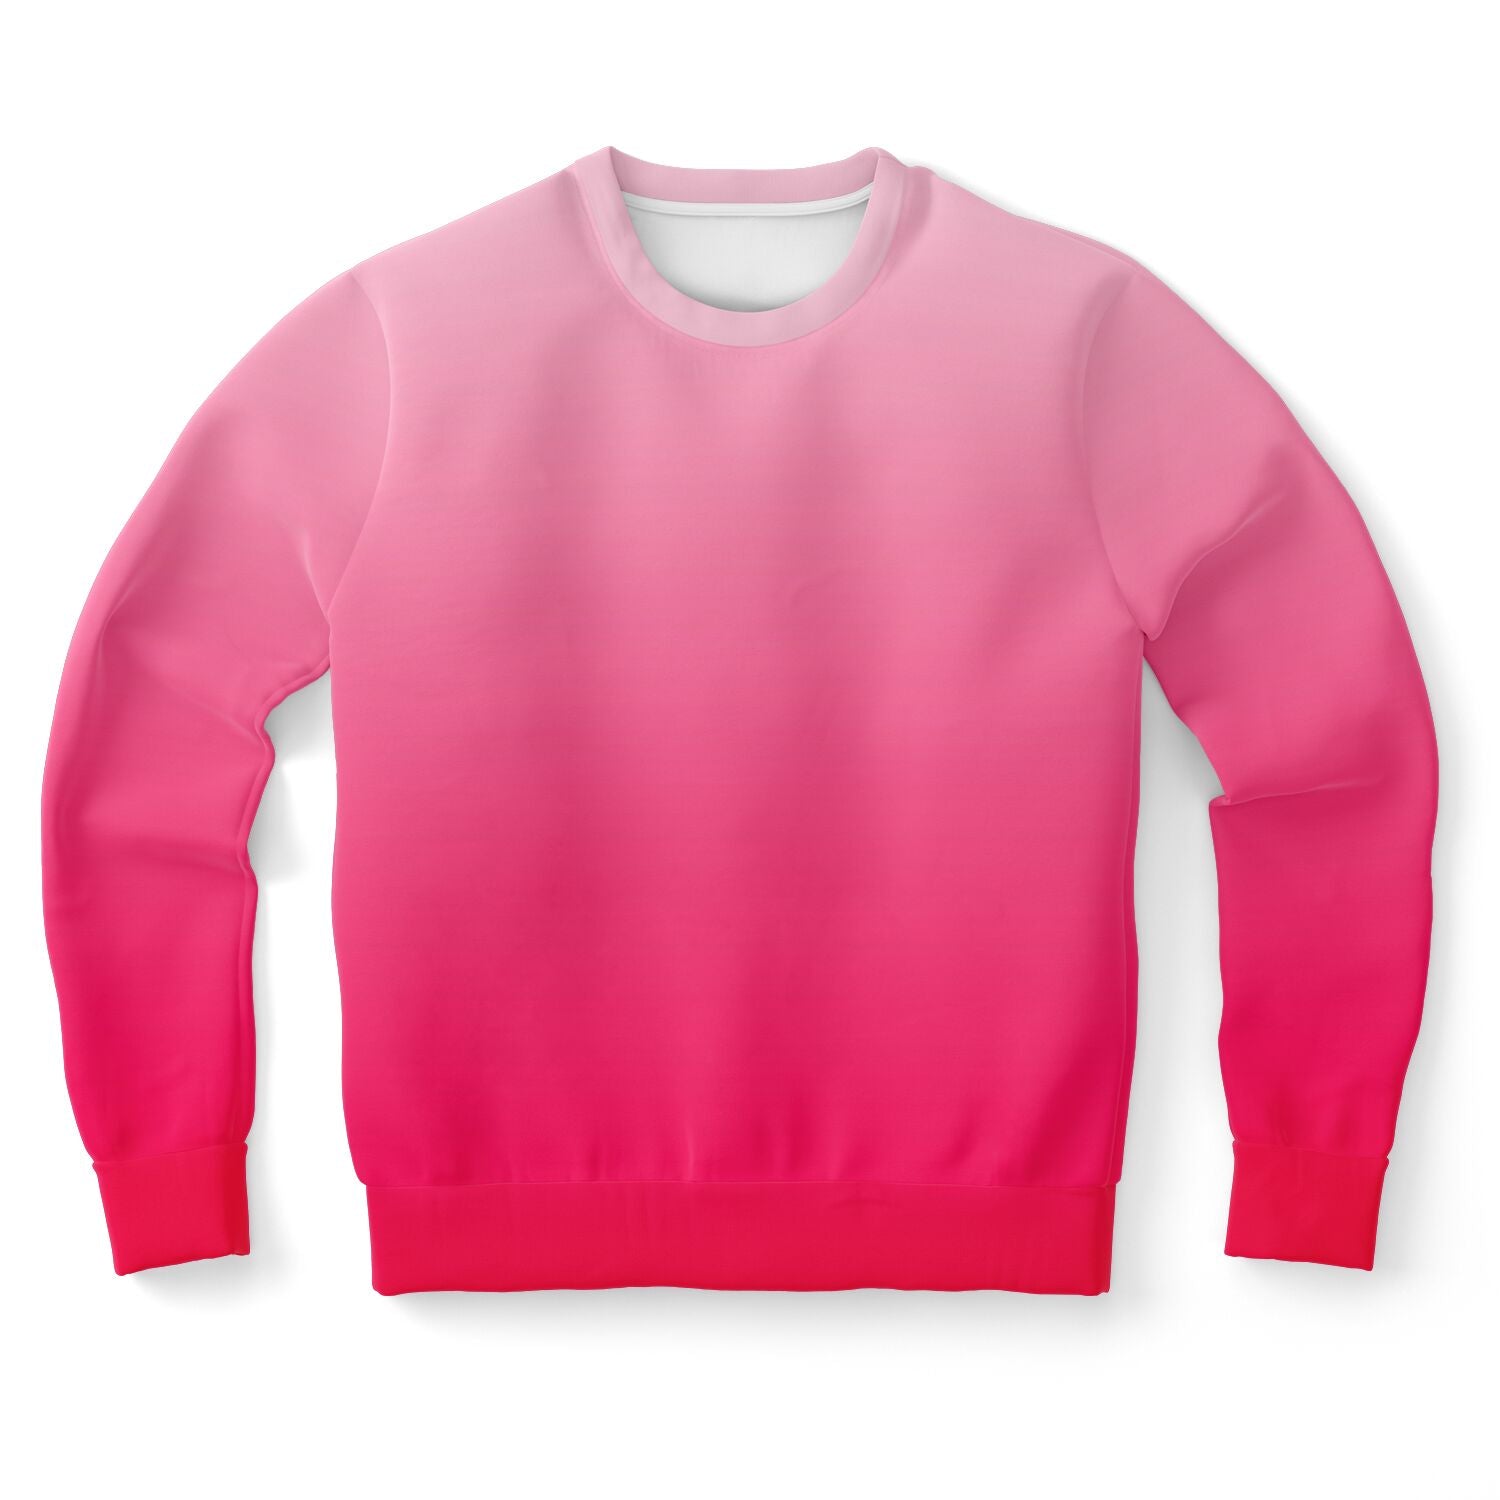 Pink Sweatshirt, Hot Ombre Gradient Graphic Crewneck Fleece Cotton Sweater Jumper Pullover Men Women Adult Aesthetic Top Starcove Fashion